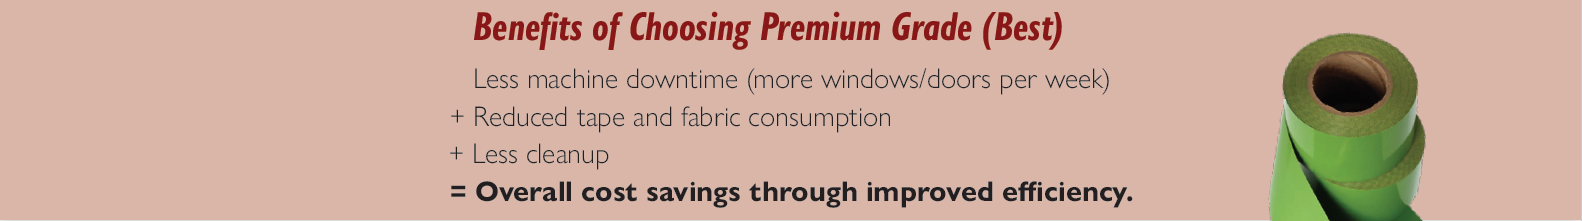 Uploaded Image: /uploads/images/PVC Window Benefits of Choosing Best.PNG